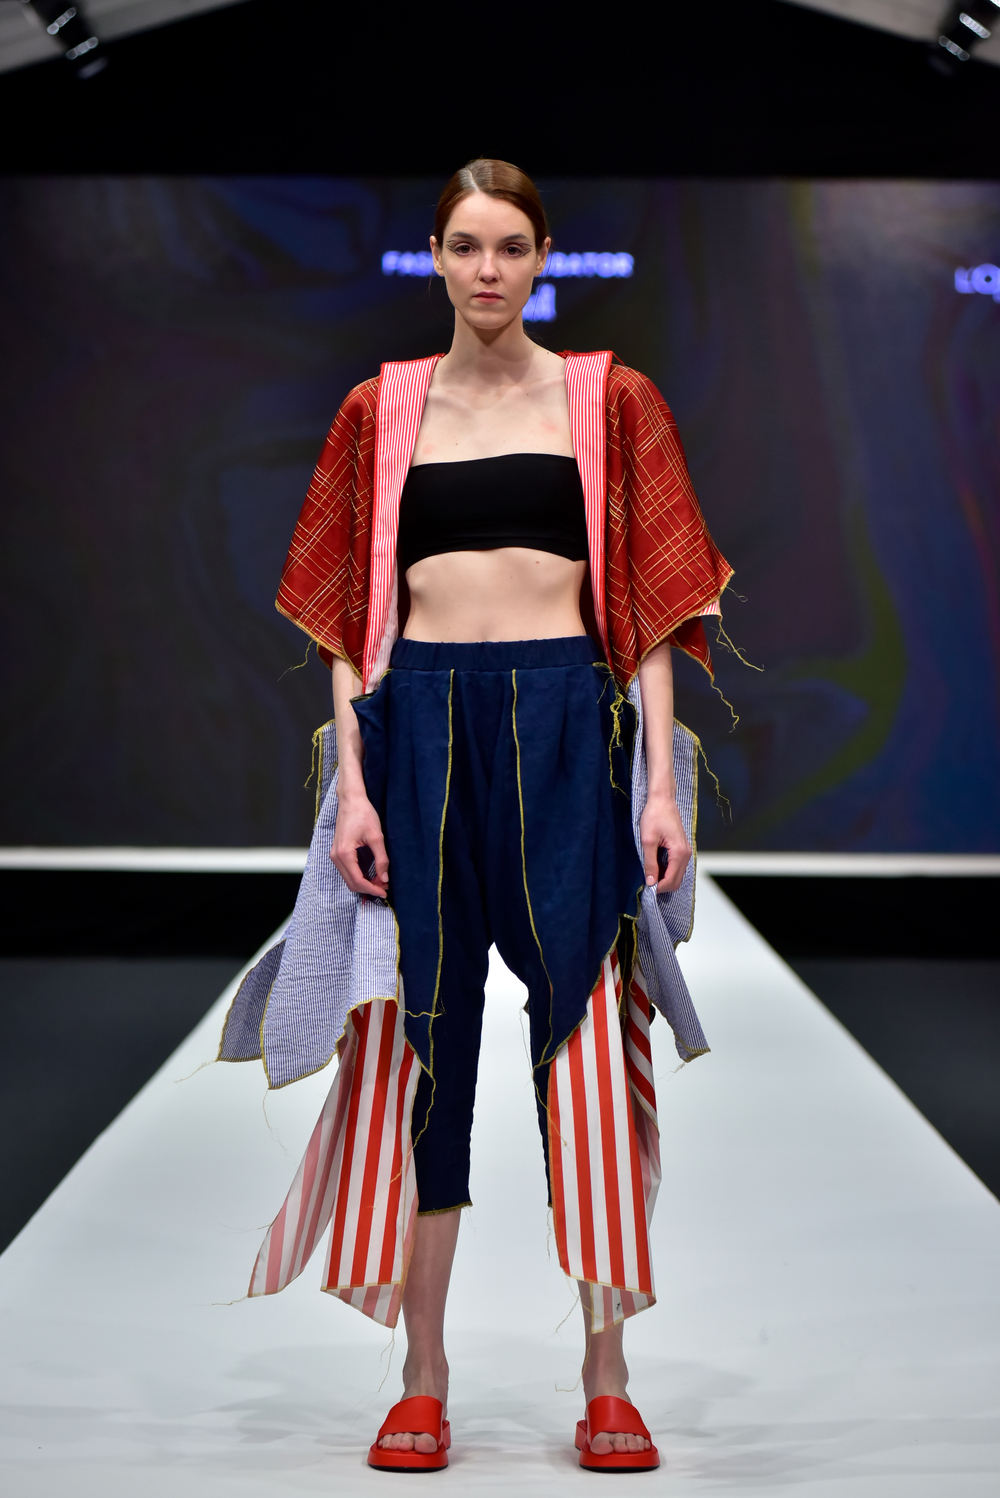 DJT2025 Visoka tekstilna skola za dizajn Studenti i Predrag Đuknić zasenili publiku na Belgrade Fashion Weeku